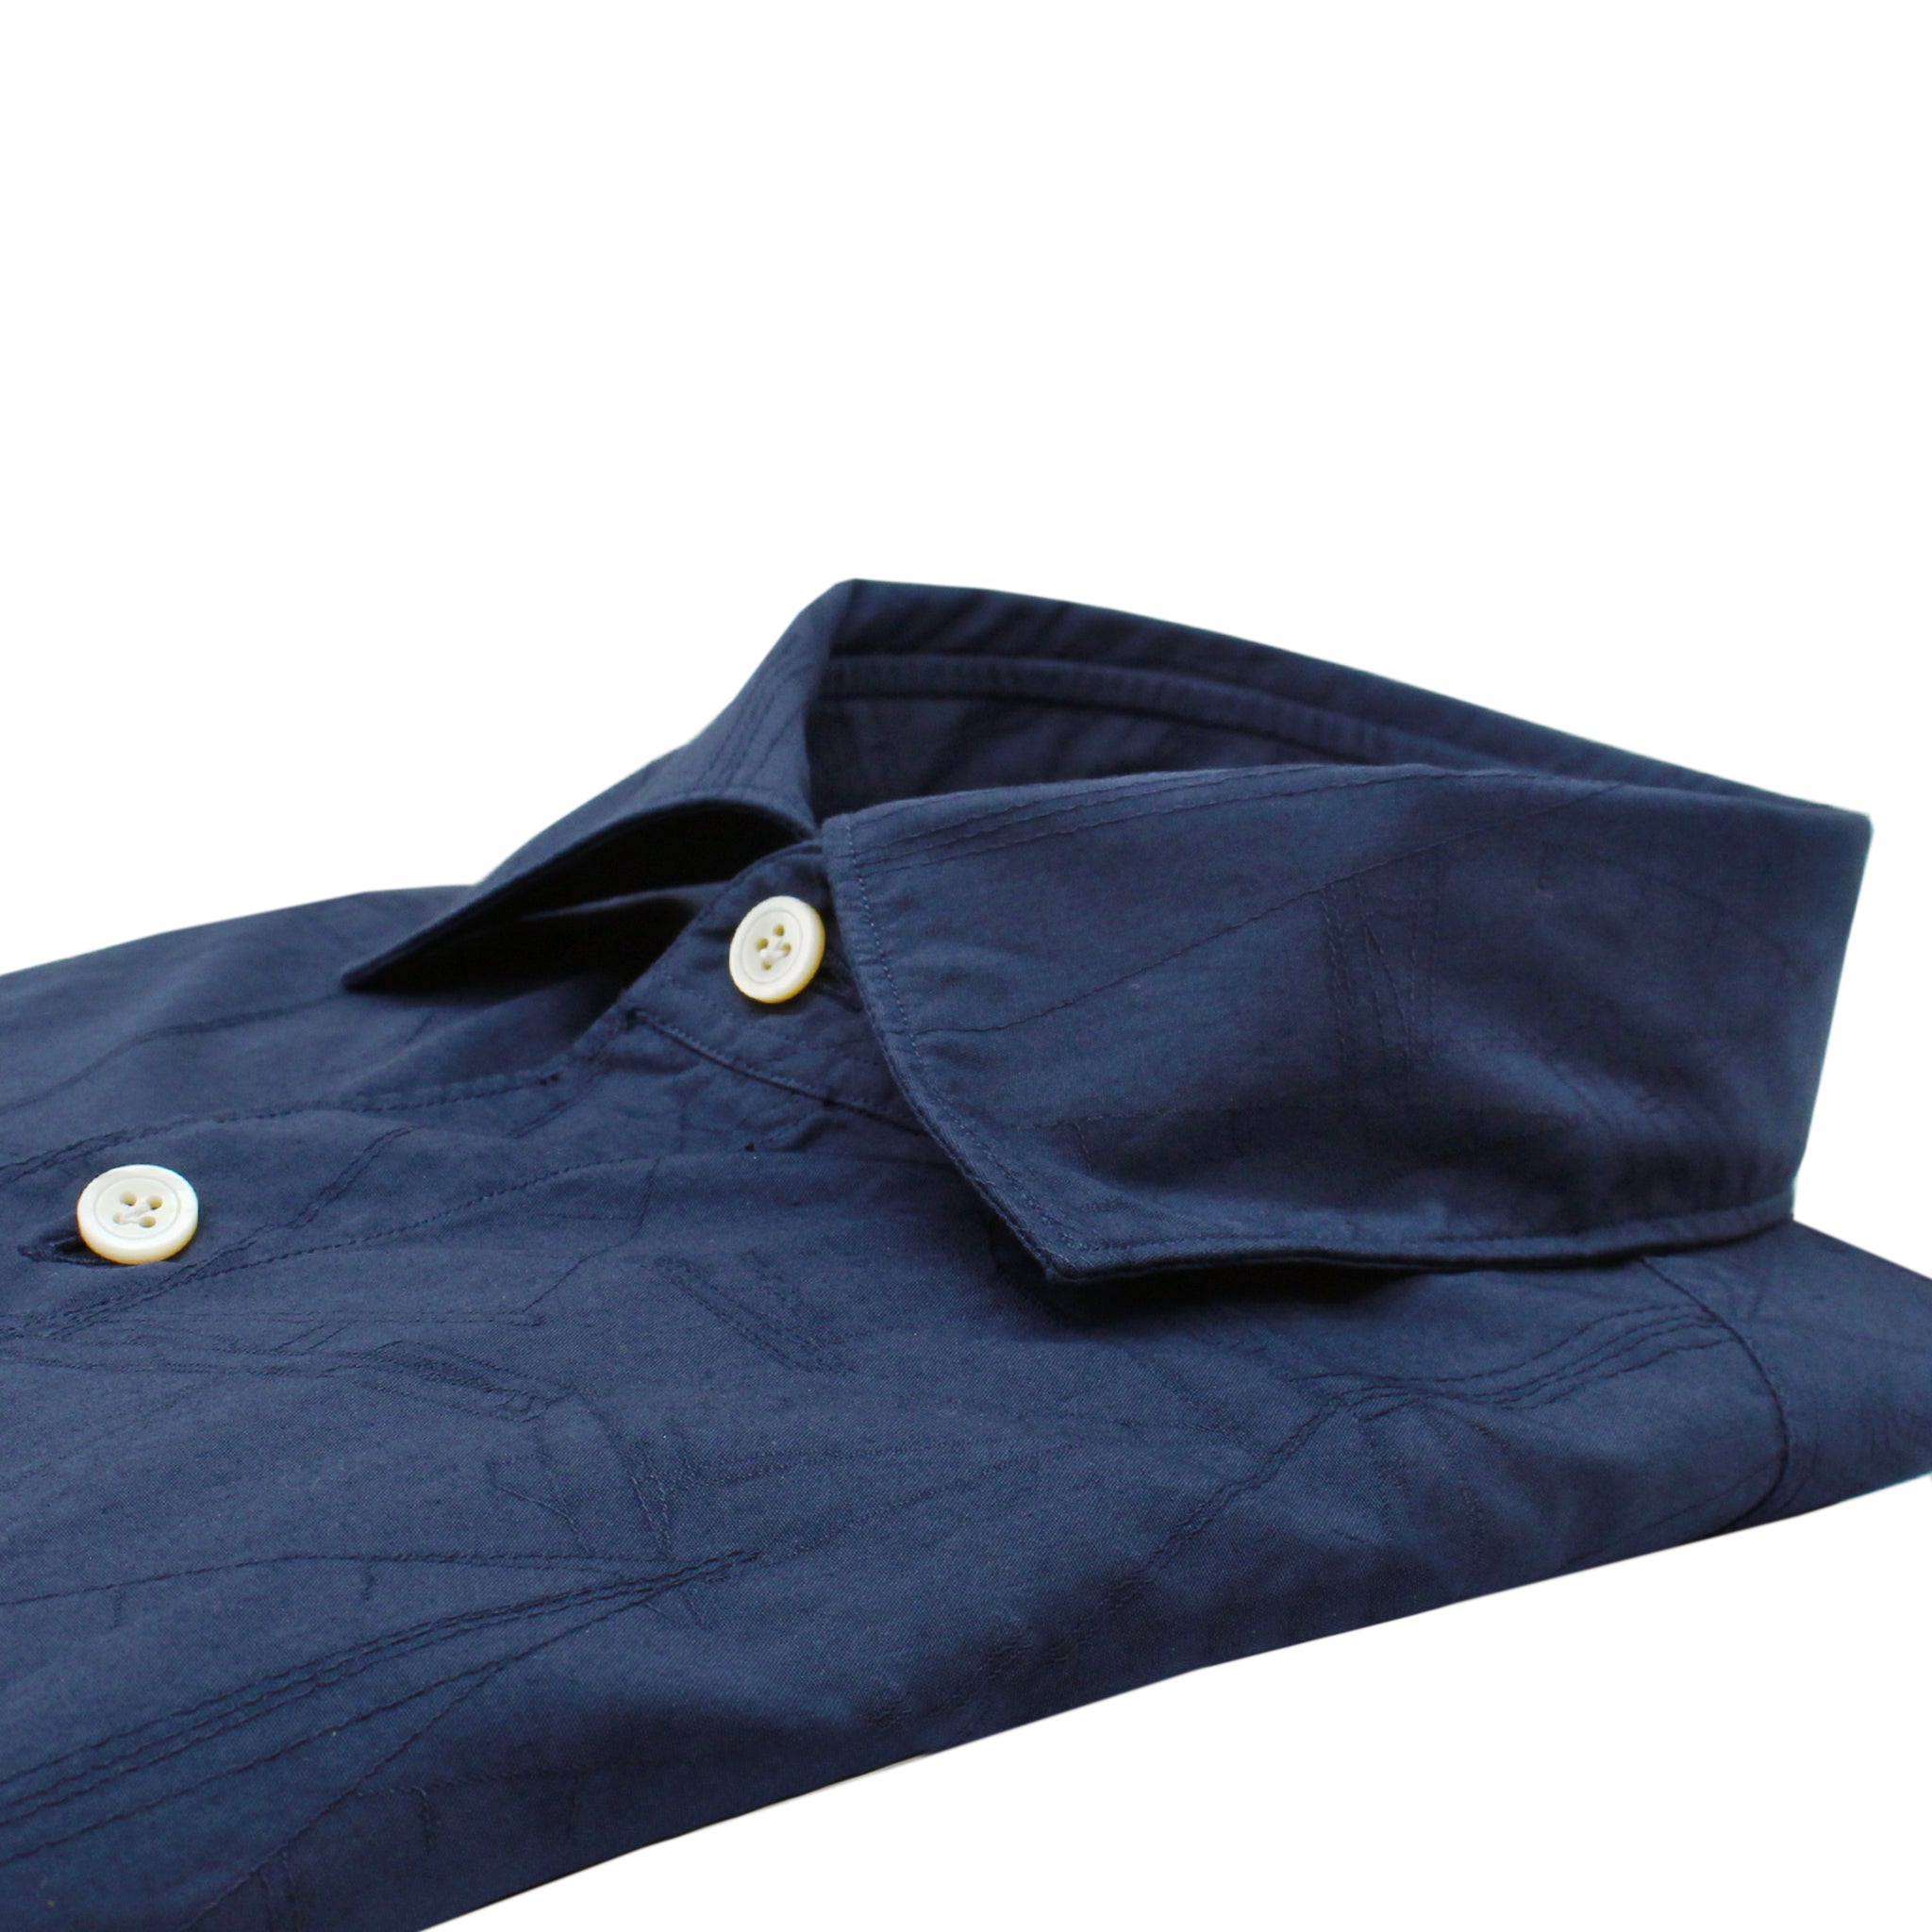 Tokyo slim fit shirt garment dyed jacquard fabric